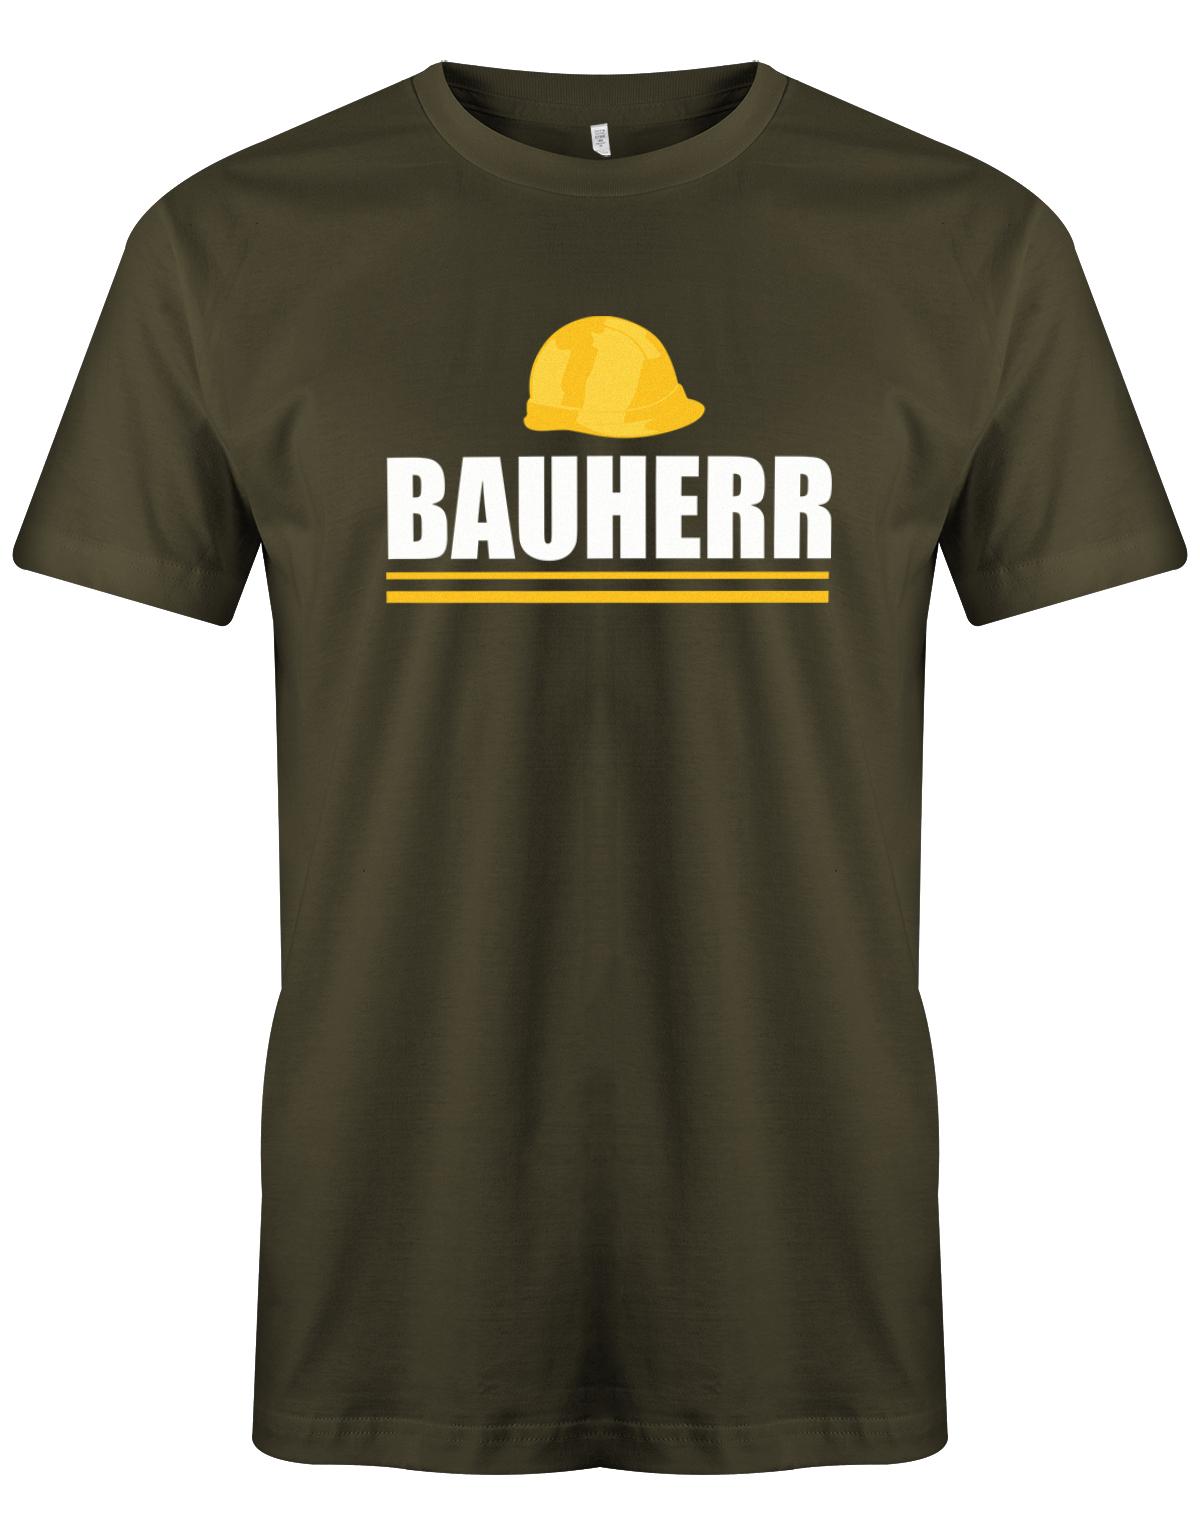 Bauherr-Bauhelm-Shirt-Herren-Army